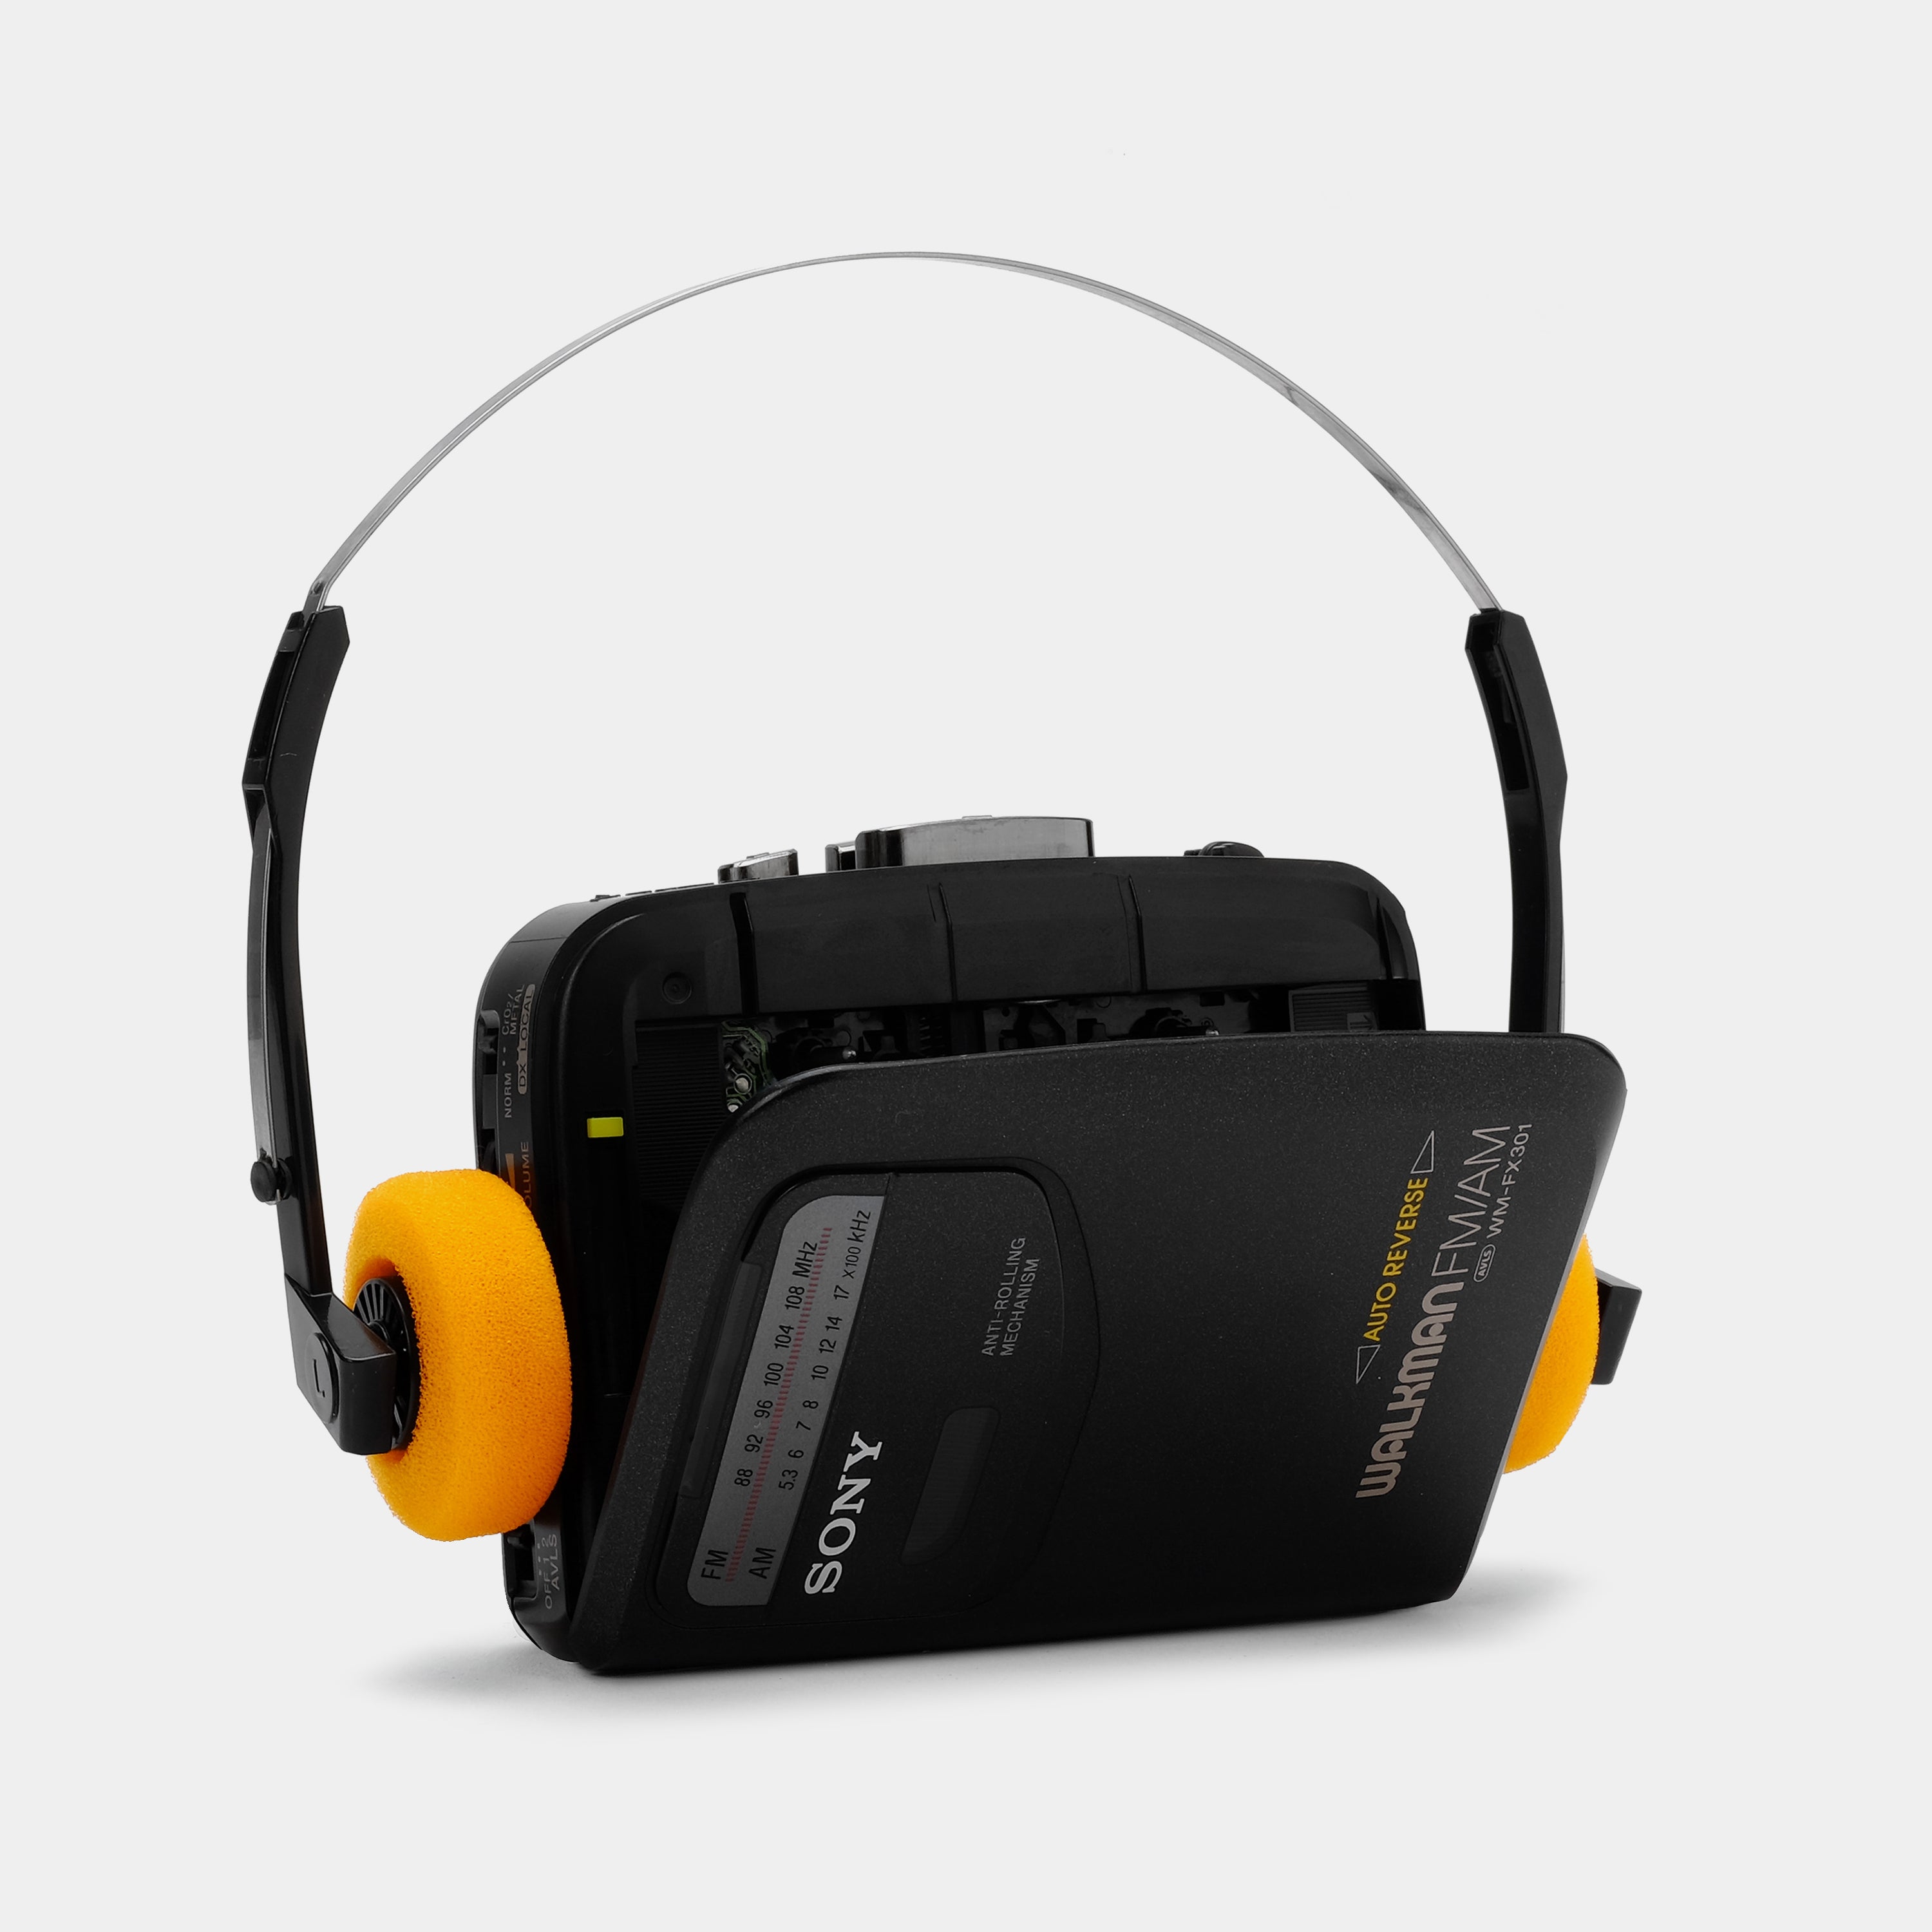 Sony Walkman WM-FX301 Auto Reverse AM/FM Portable Cassette Player